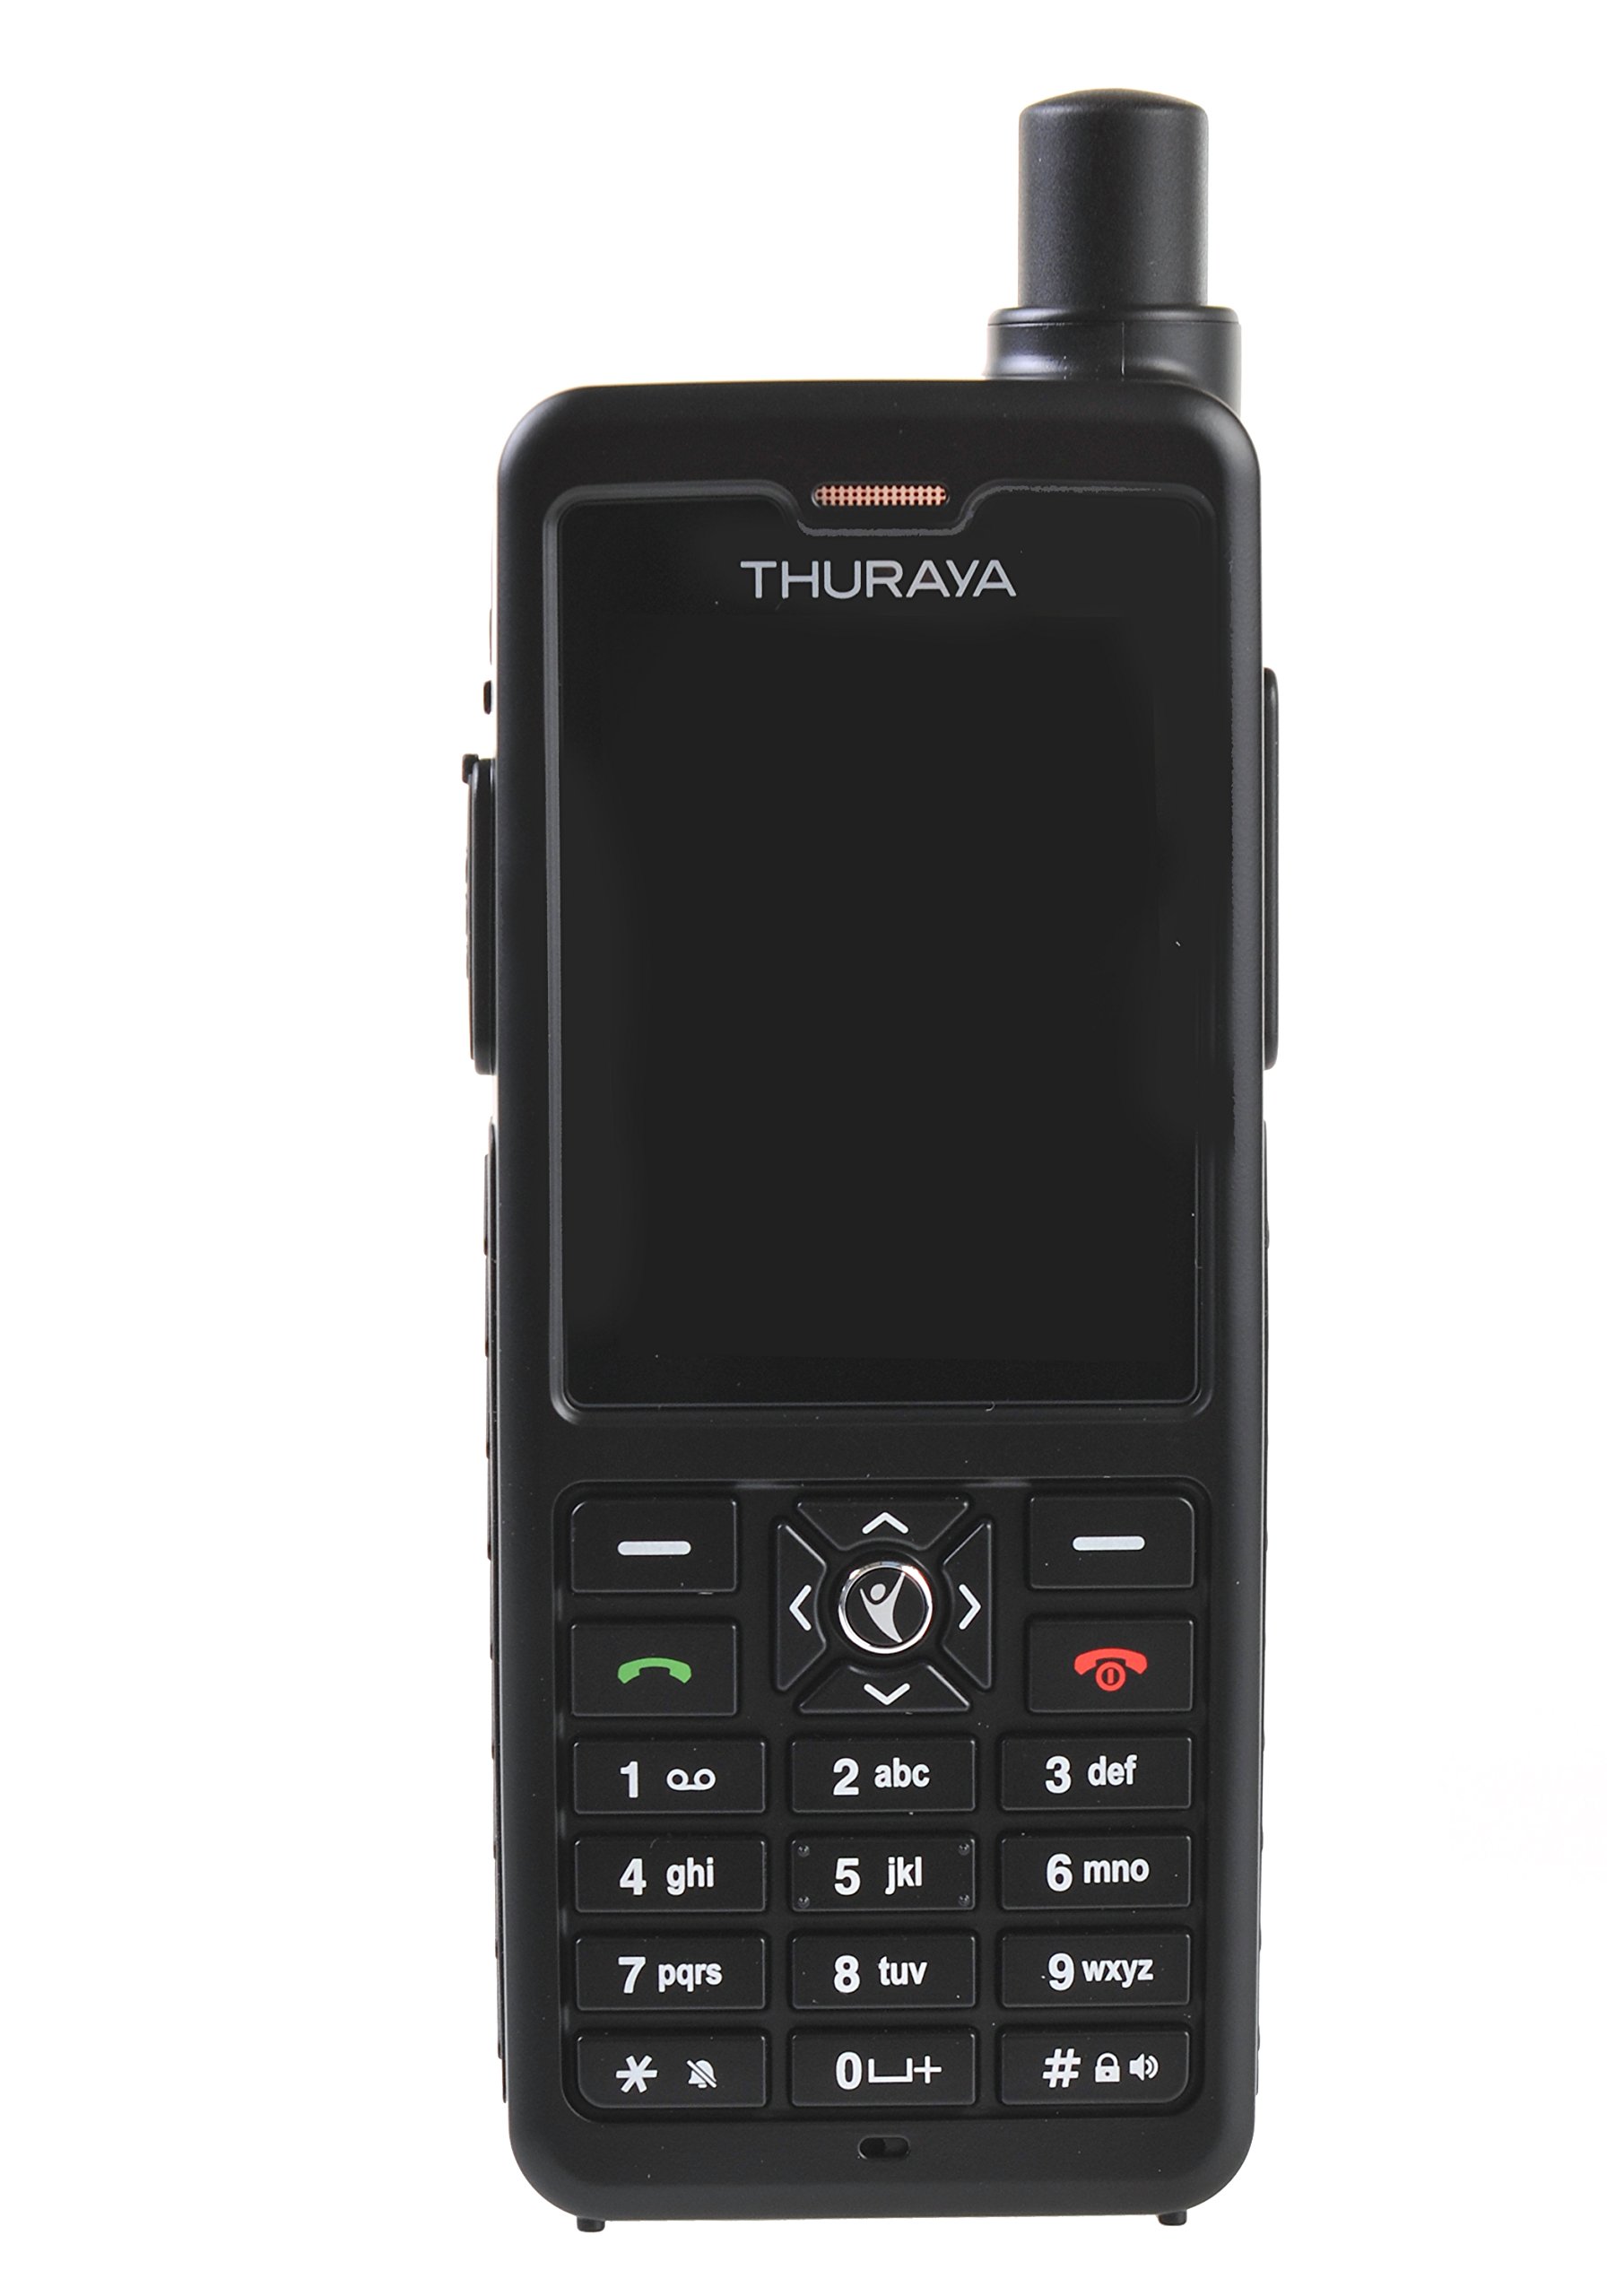 THUXTPRO - Thuraya XT-PRO Satellite Phone c-w